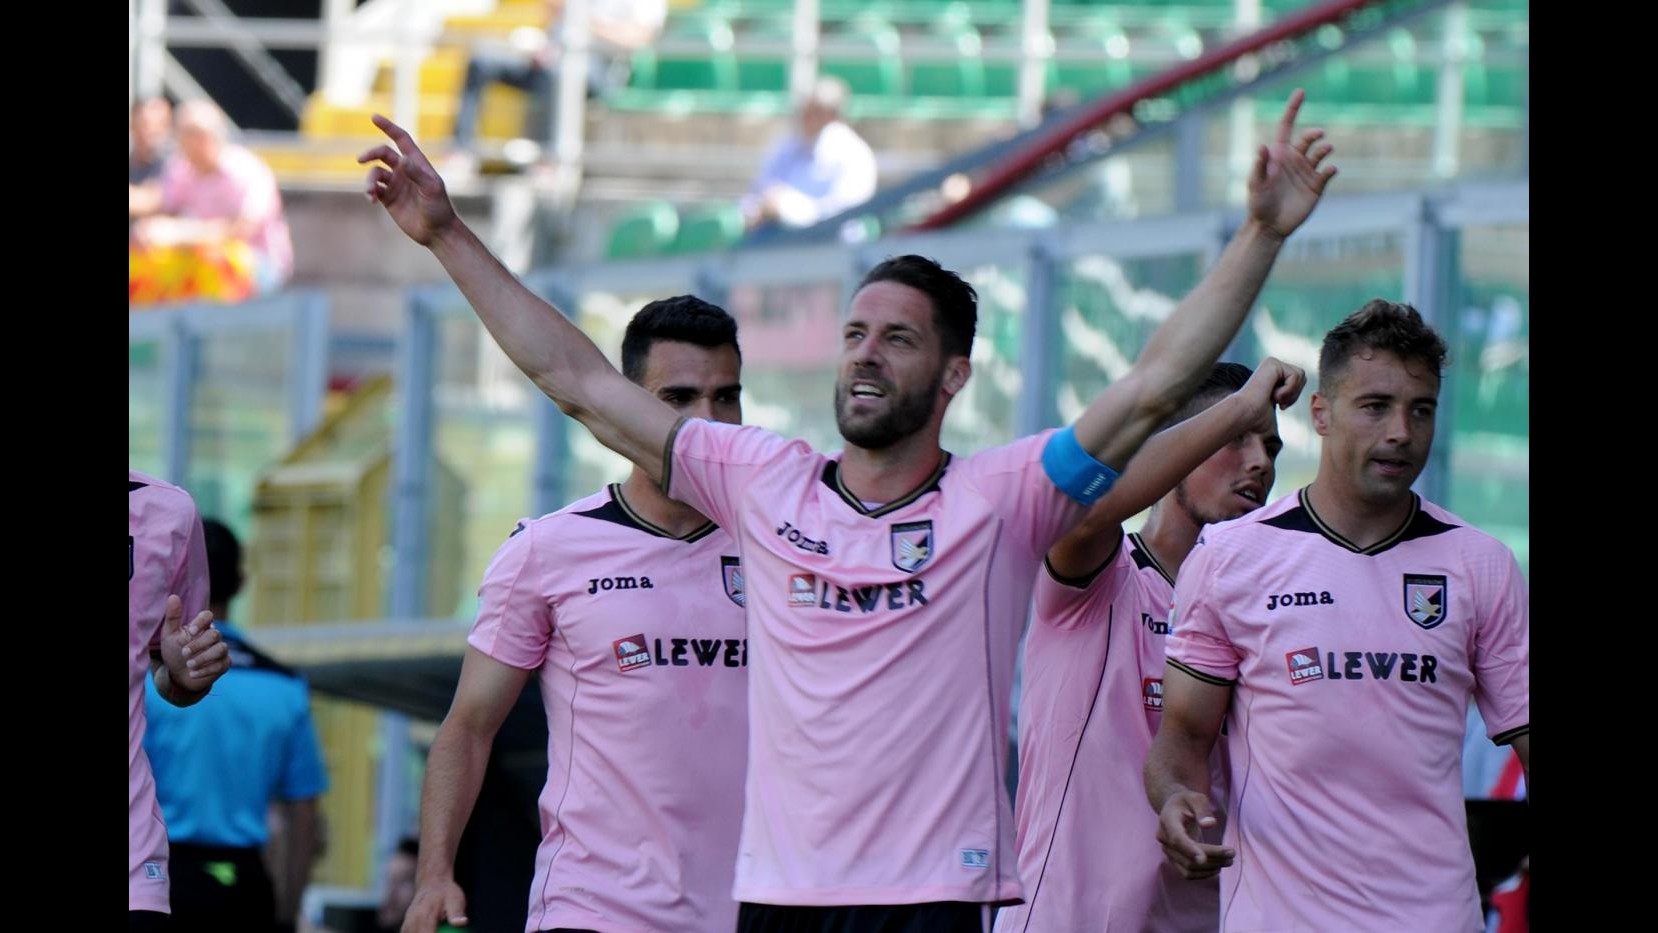 FOTO Serie A, Palermo batte Genoa 1-0